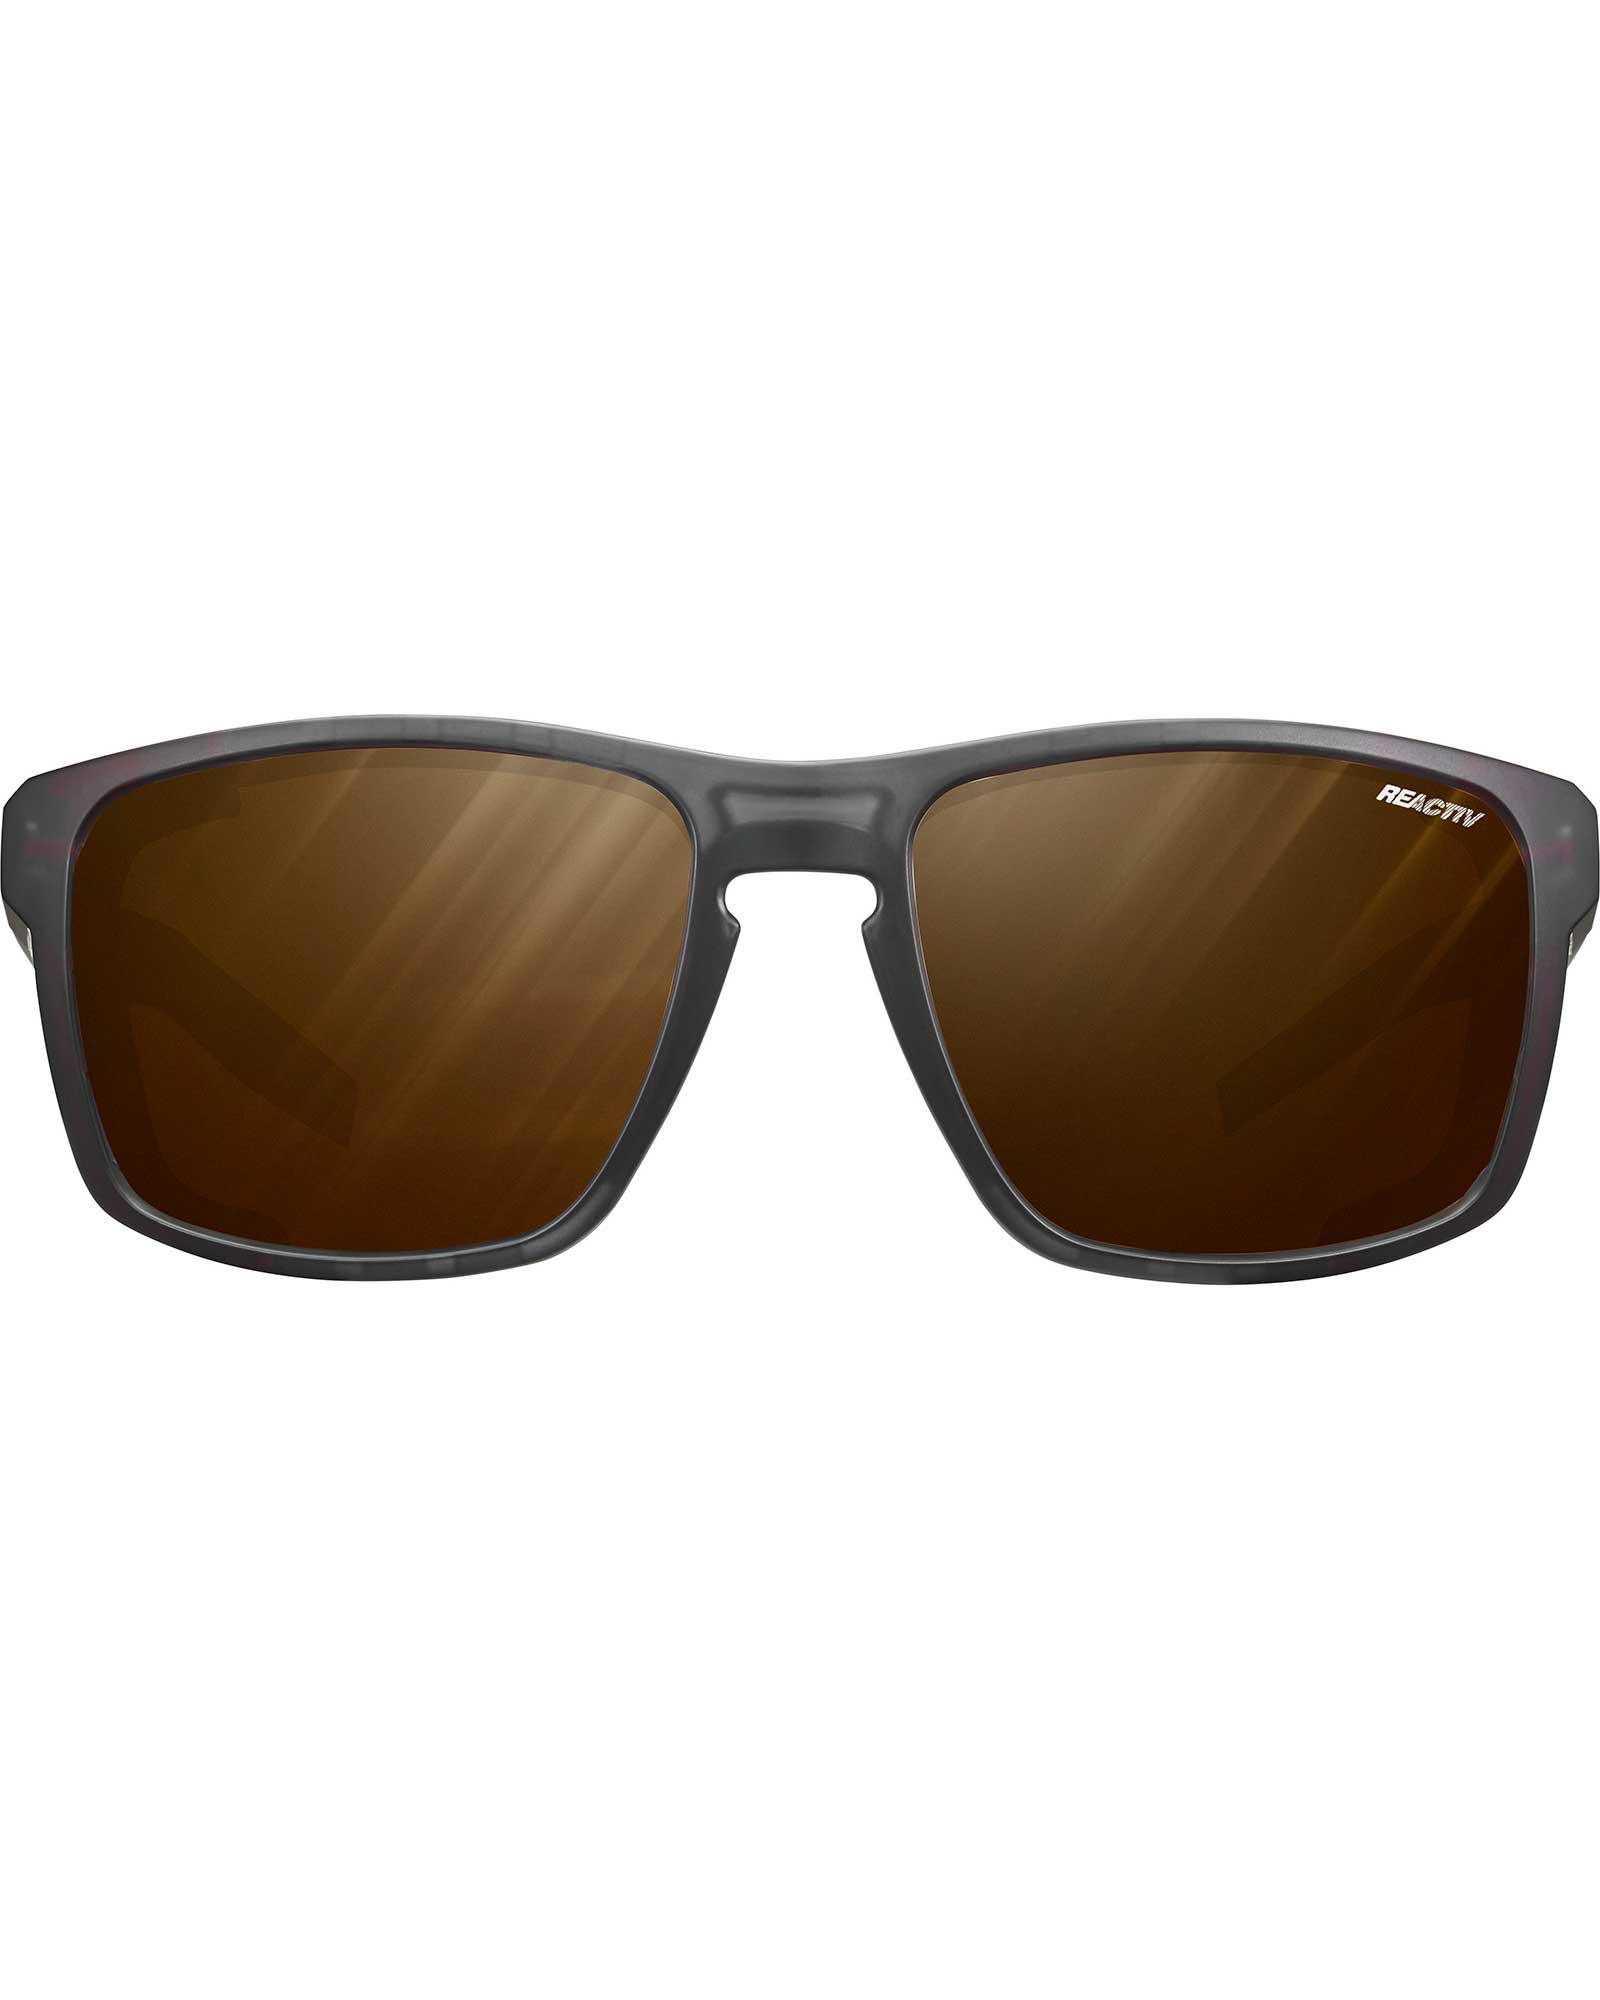 Julbo Shield M Matt Black/Orange / Reactiv Polarized 2 4 Sunglasses - Matt Black/Orange